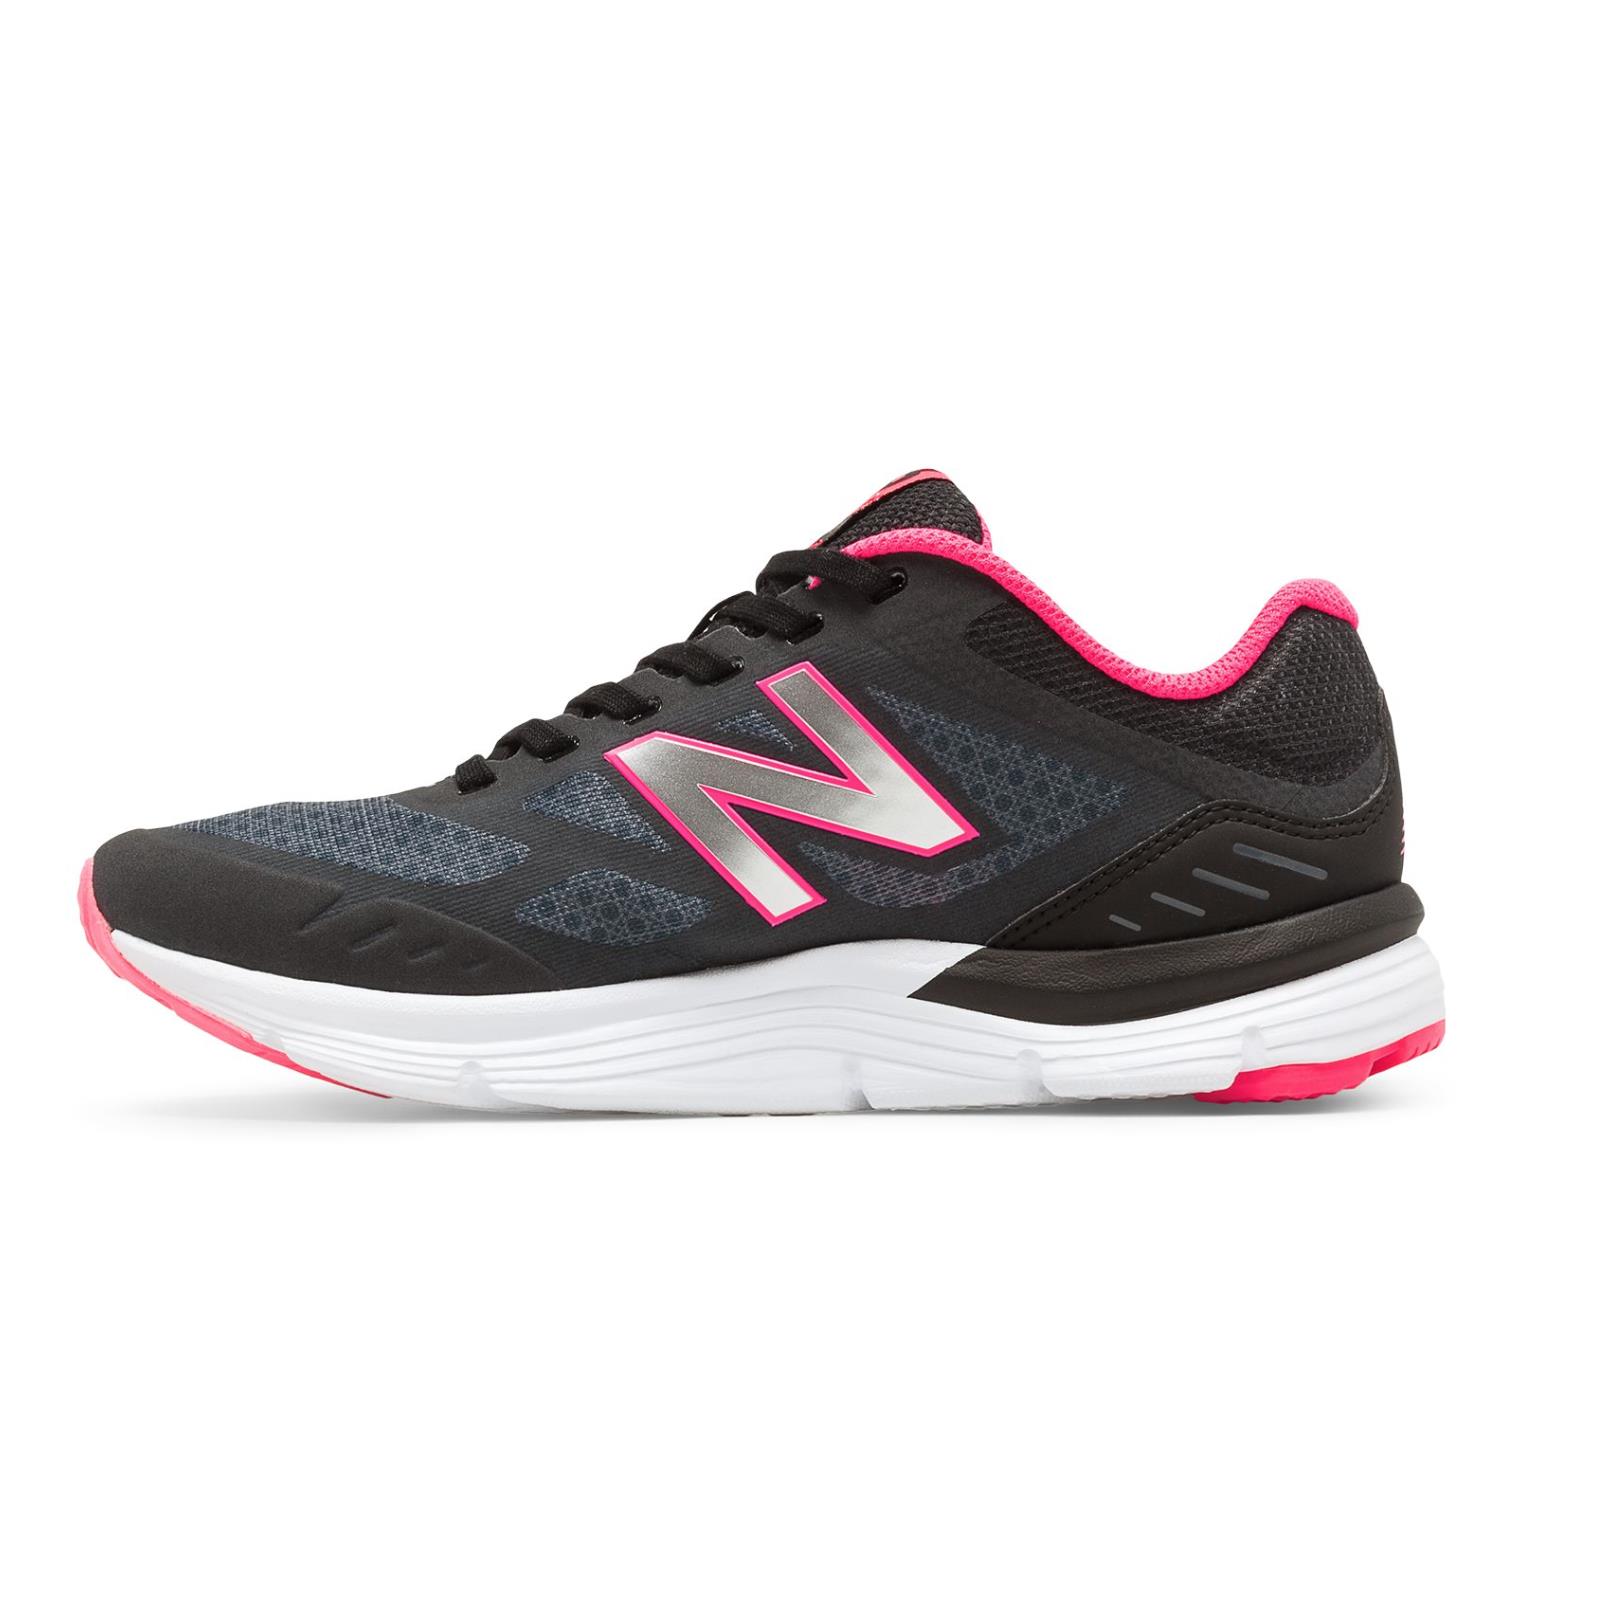 New Balance 775v3 Running Course Shoes Black N1290 Women Size 6.5 B